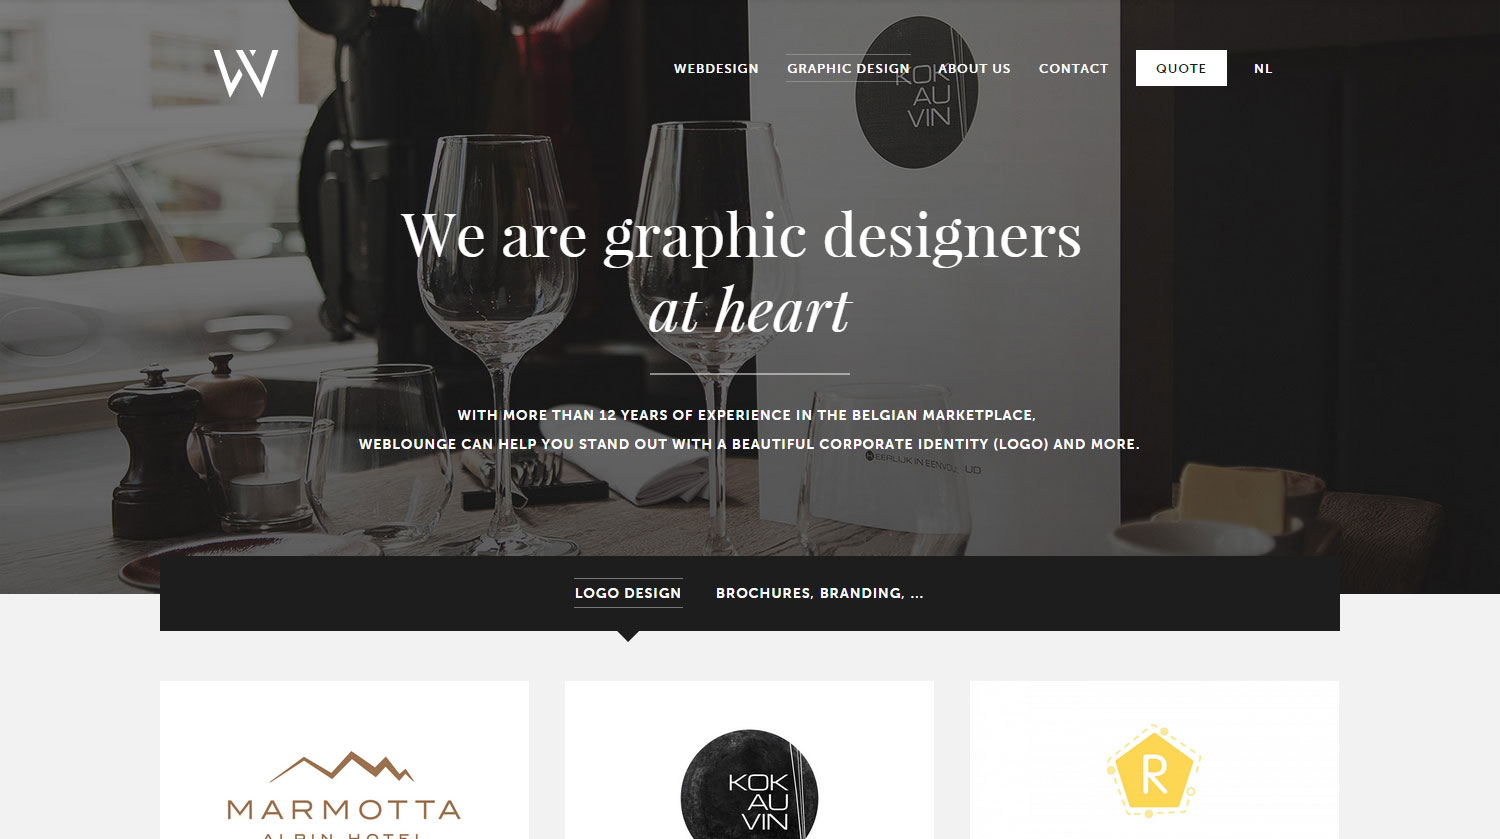 Webdesign Agency Weblounge - Website of the Day